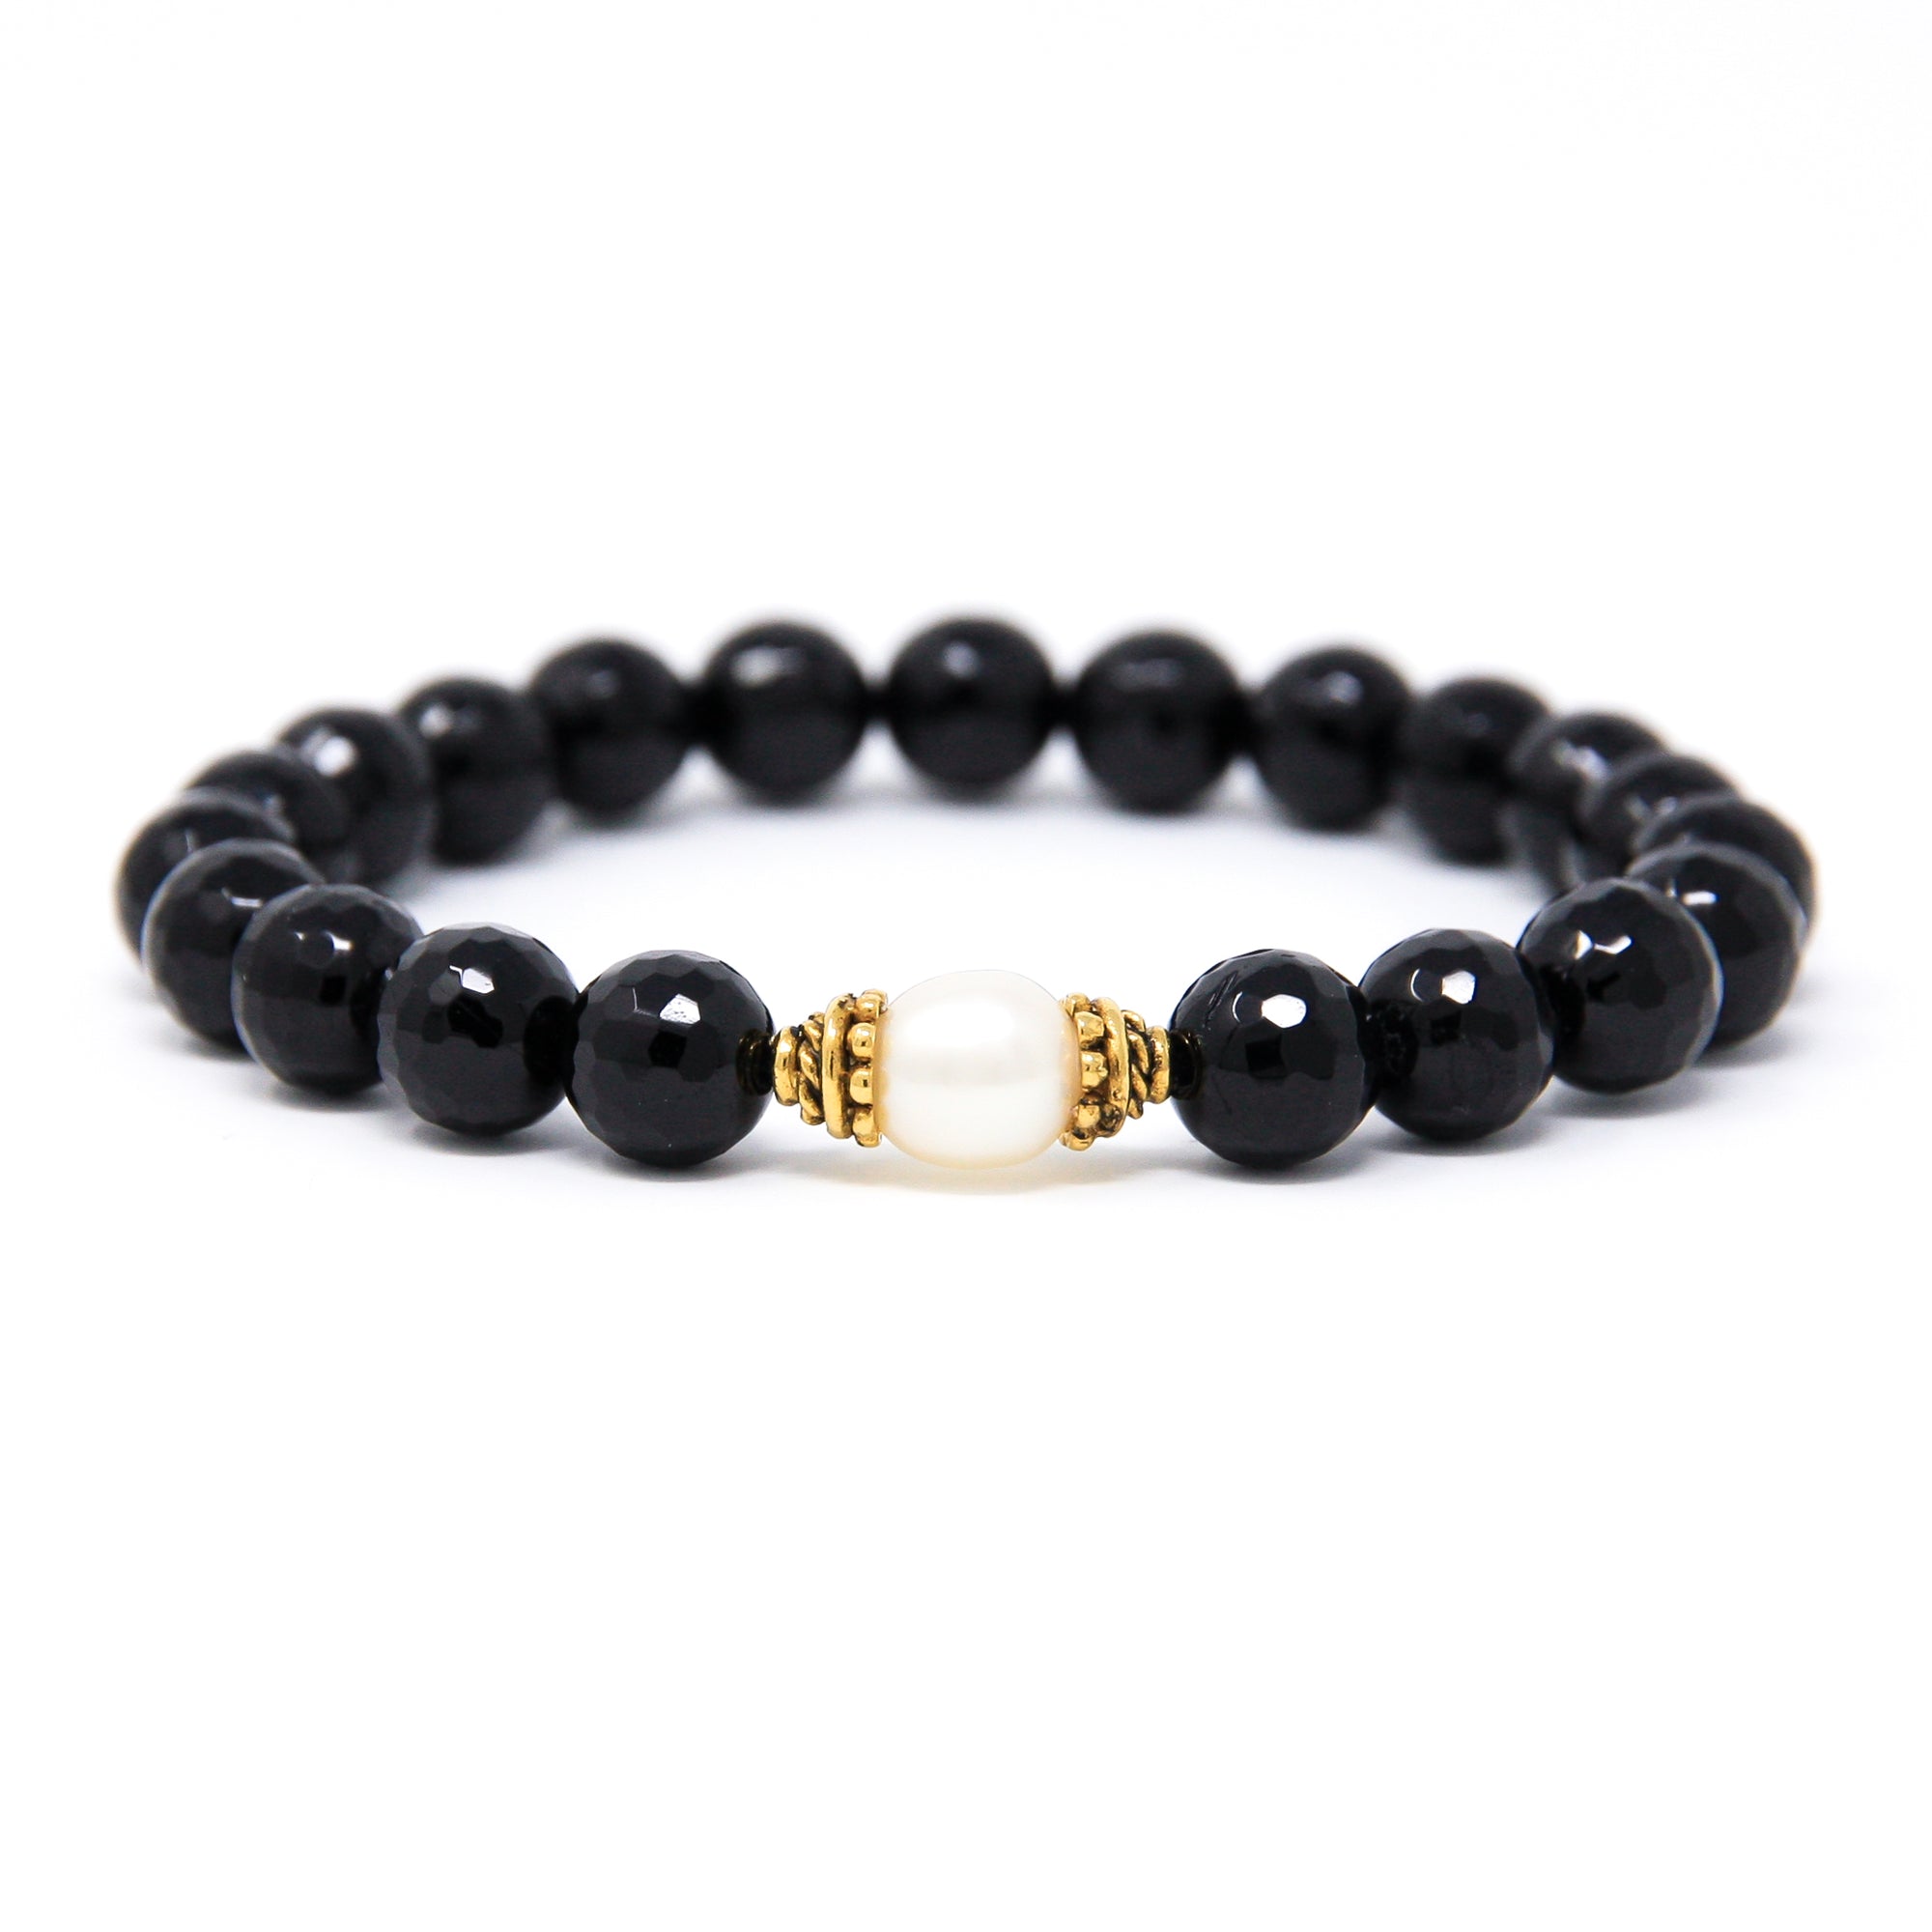 Black Tourmaline bracelet, mala beads